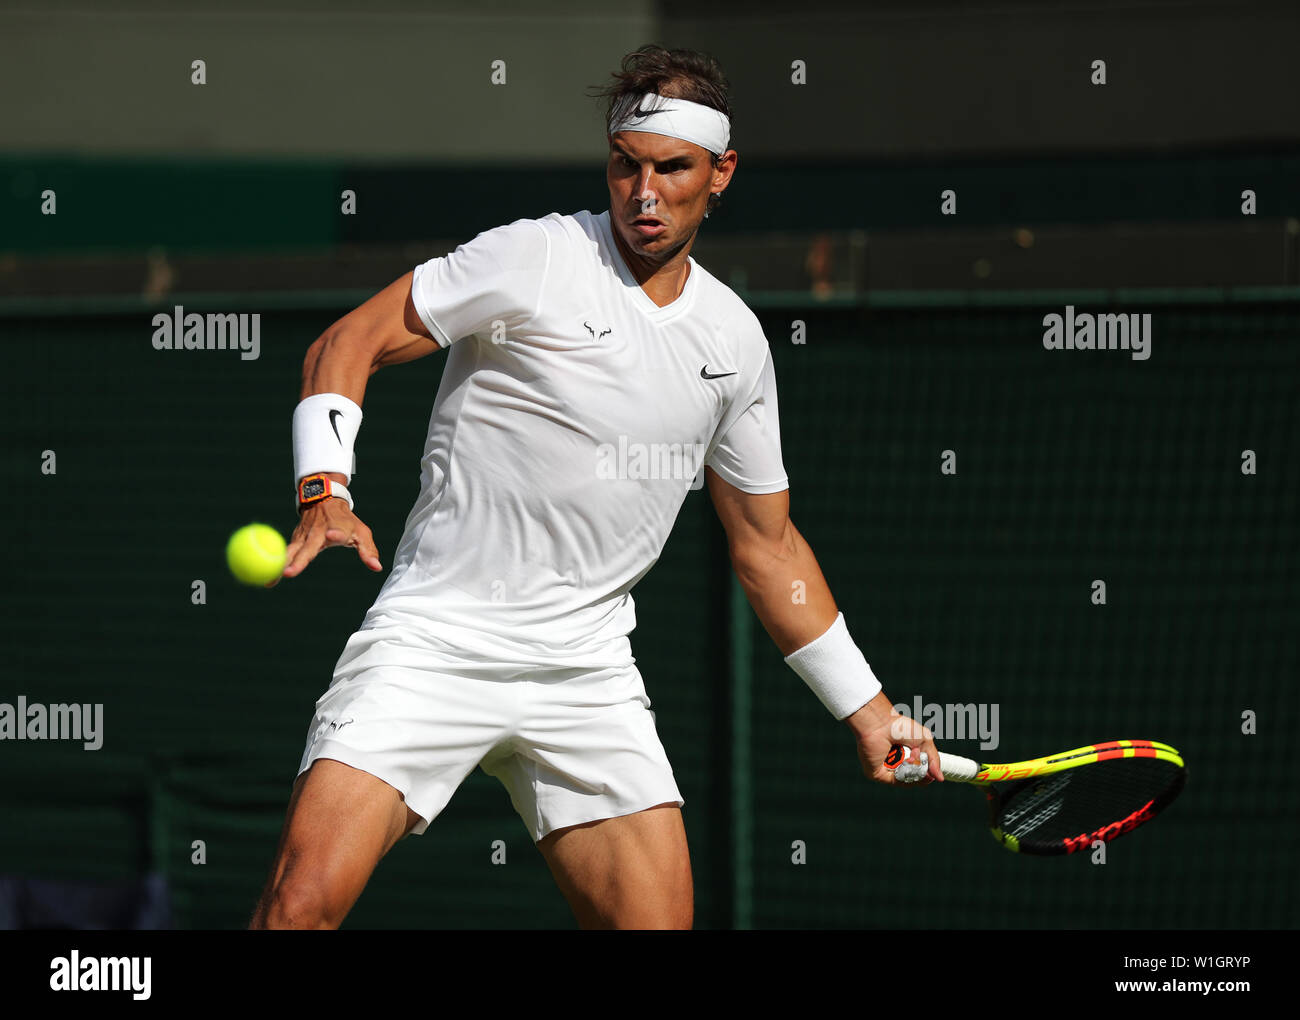 Rafael Nadal 2019 WIMBLEDON Foto de stock